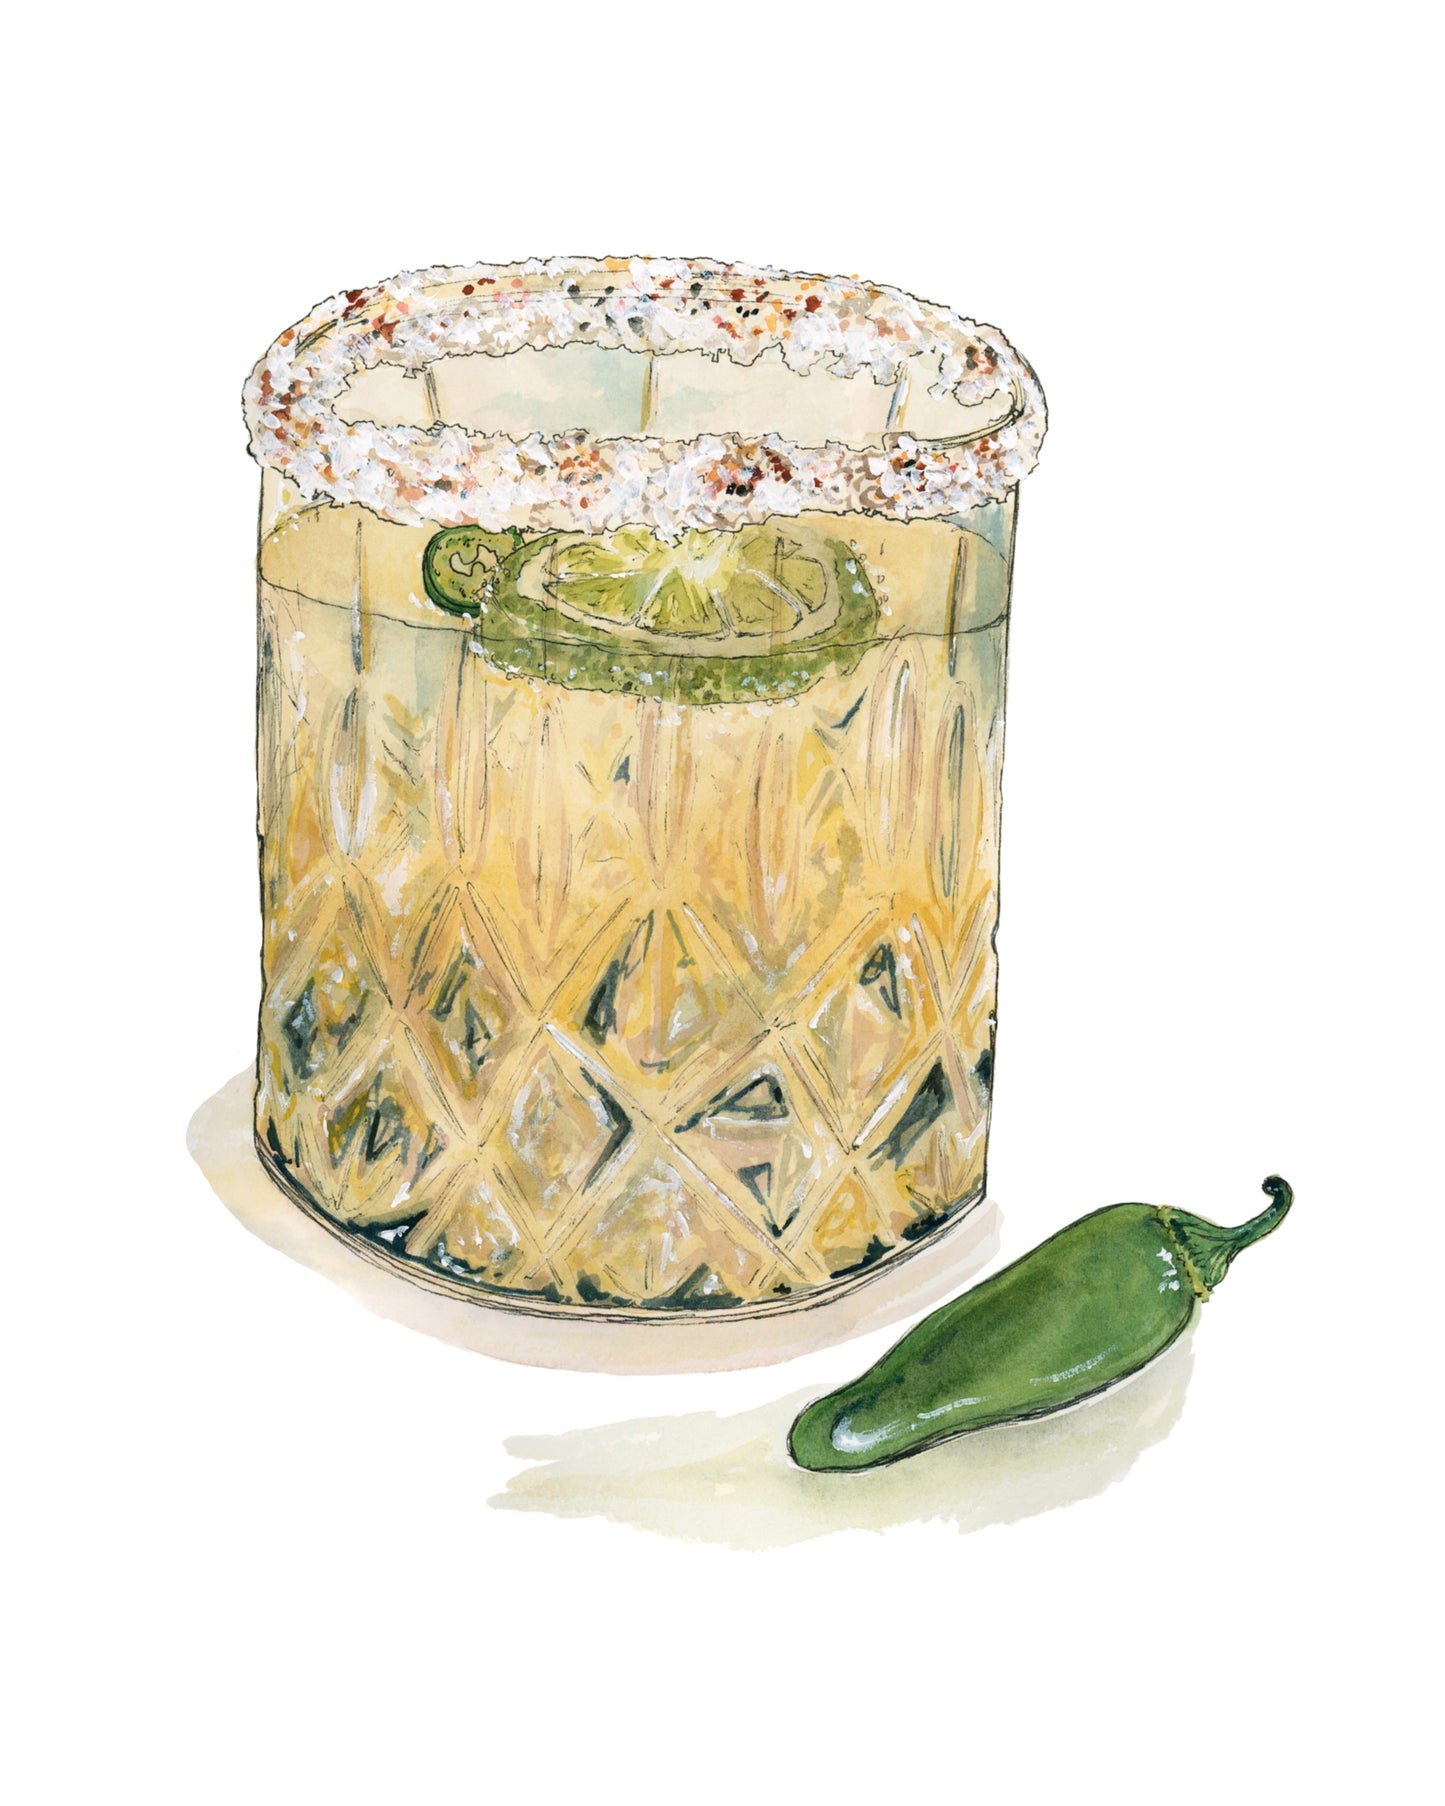 Spicy Margarita Art Print